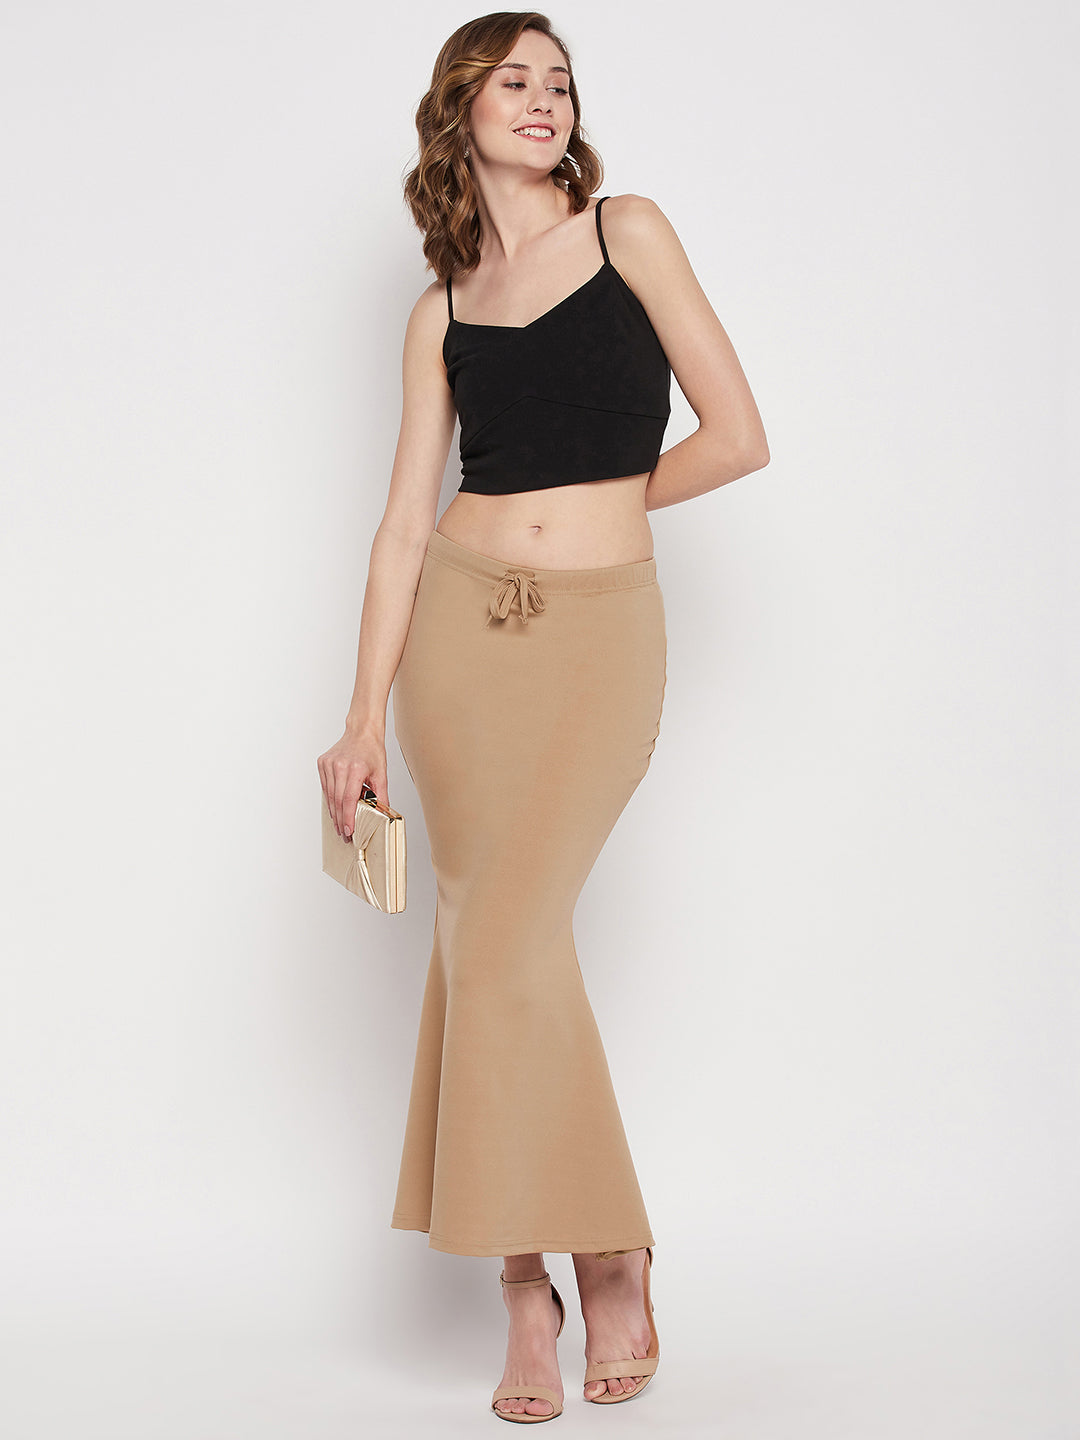 Saree Shapewear Petticoats - Buy Saree Shapewear Petticoats Online